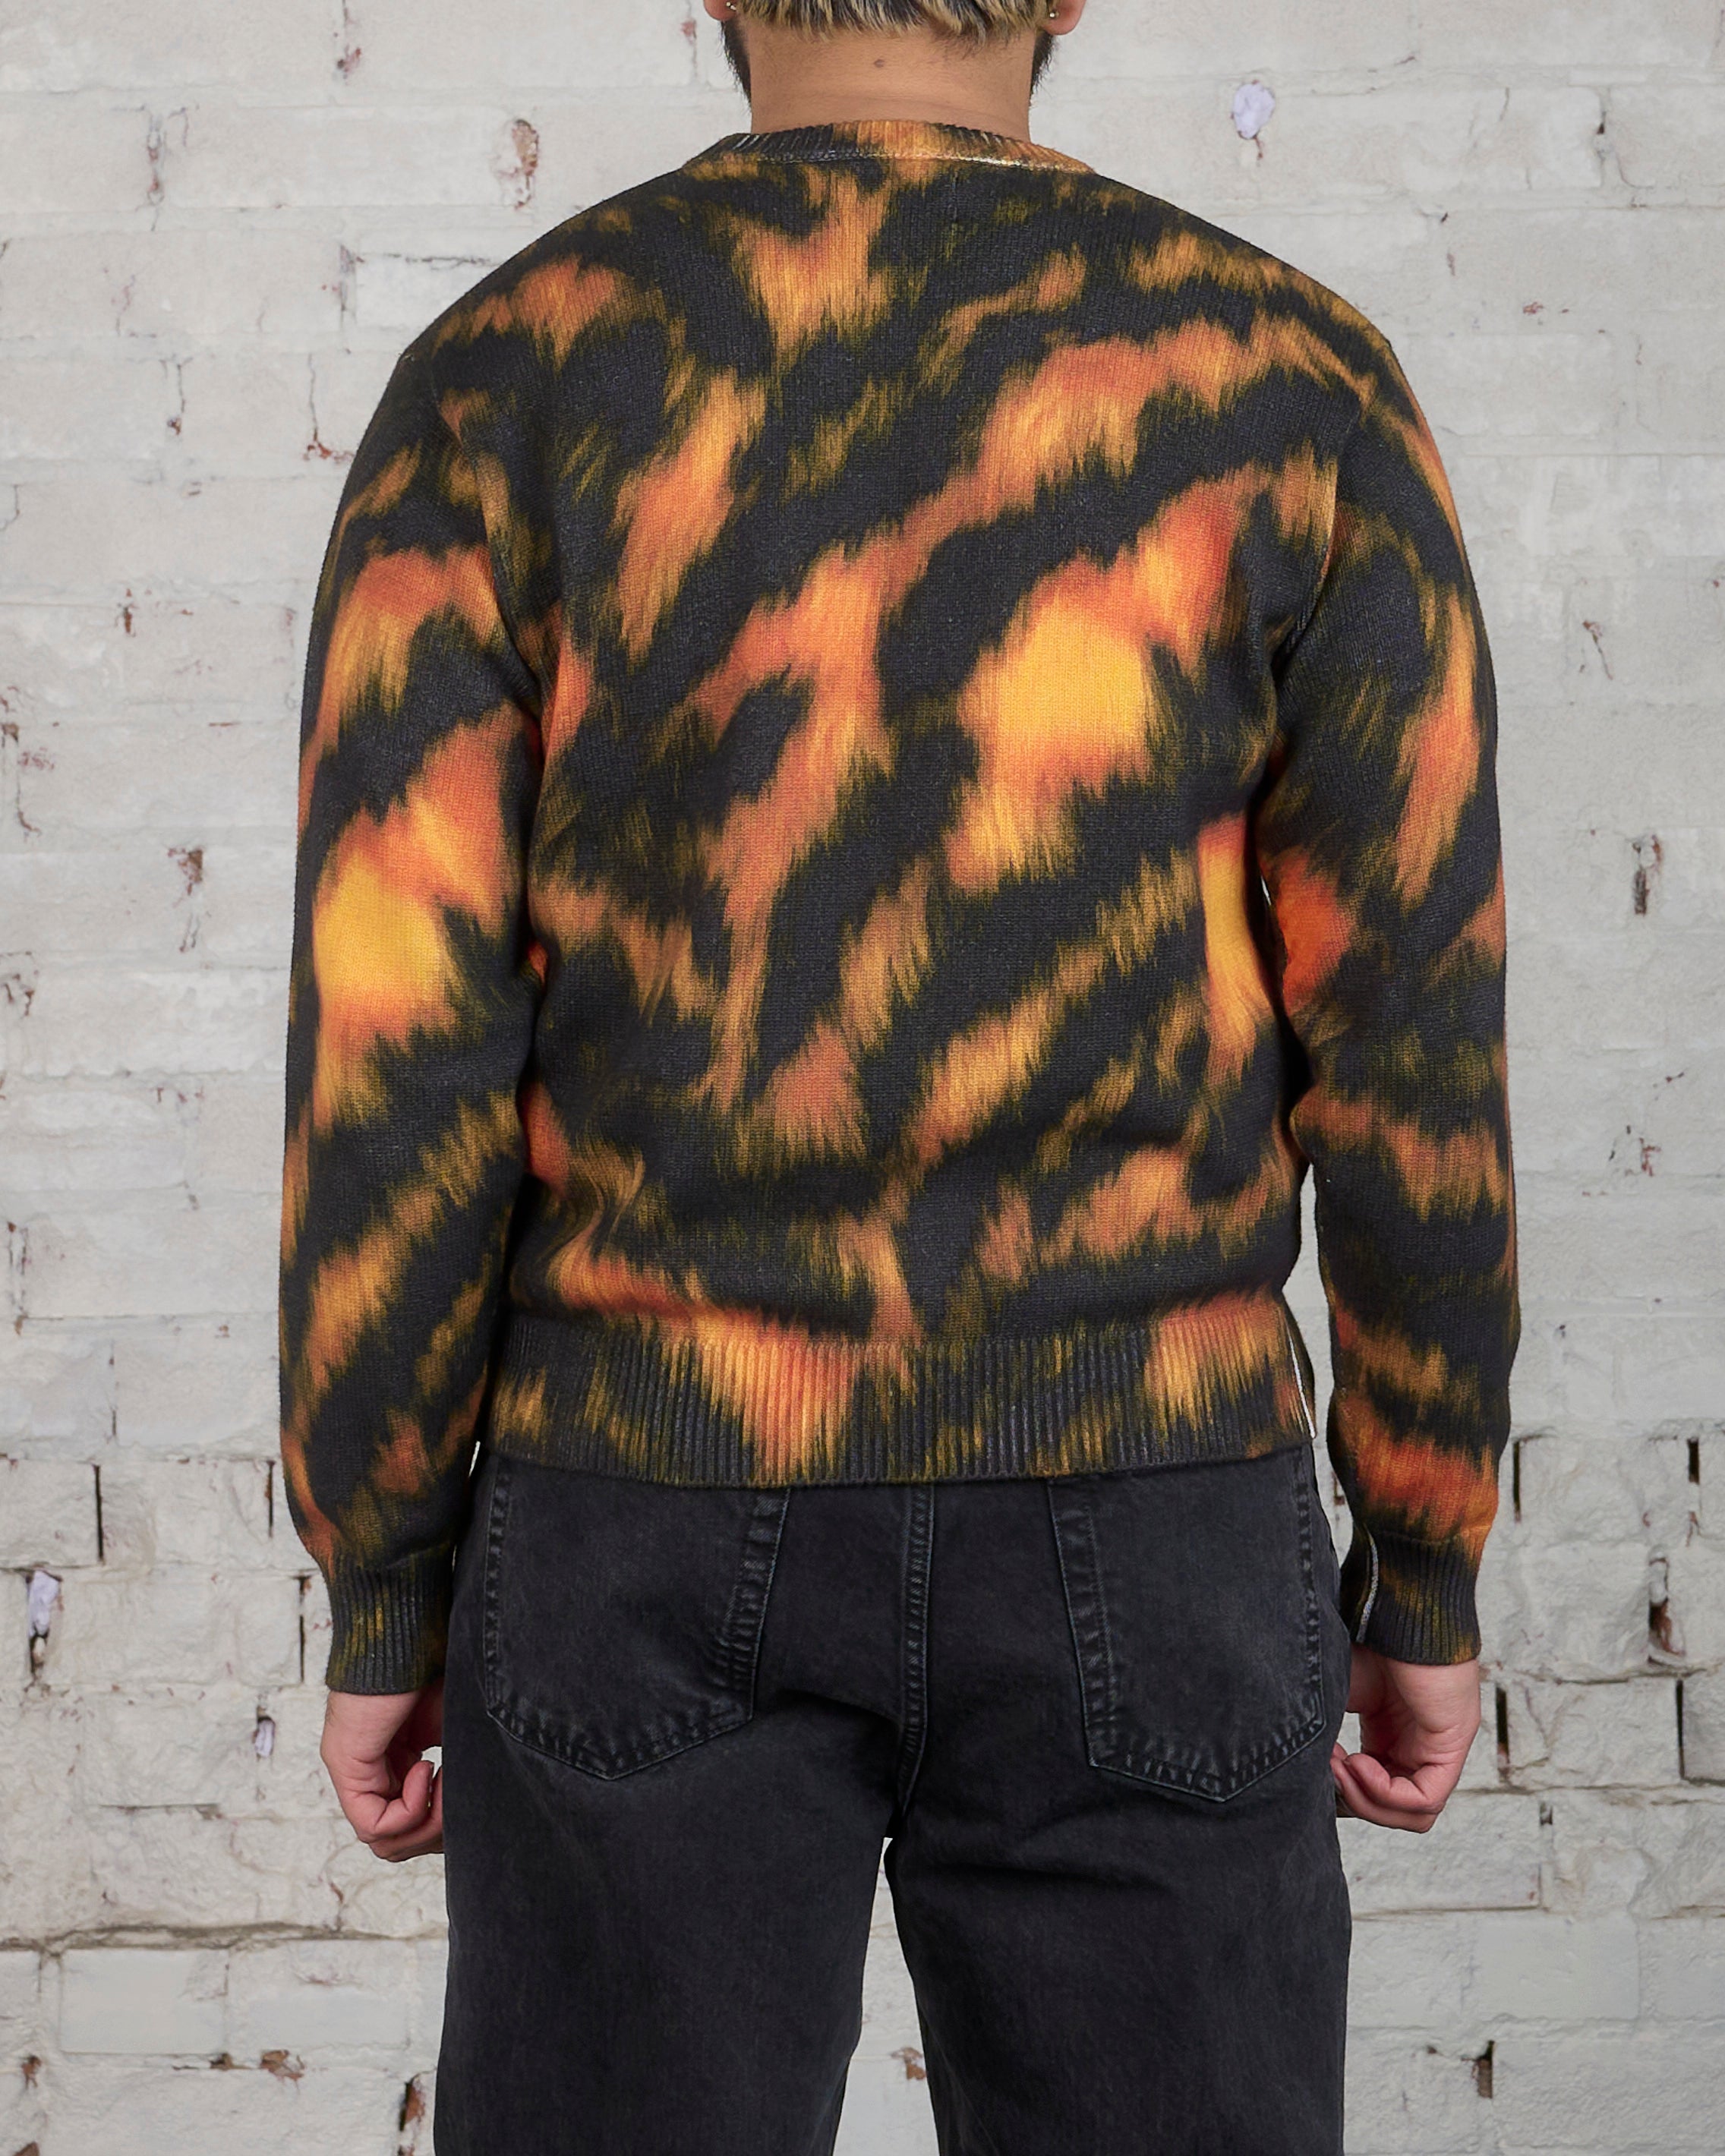 Stussy Printed Fur Sweater Tiger – LESS 17